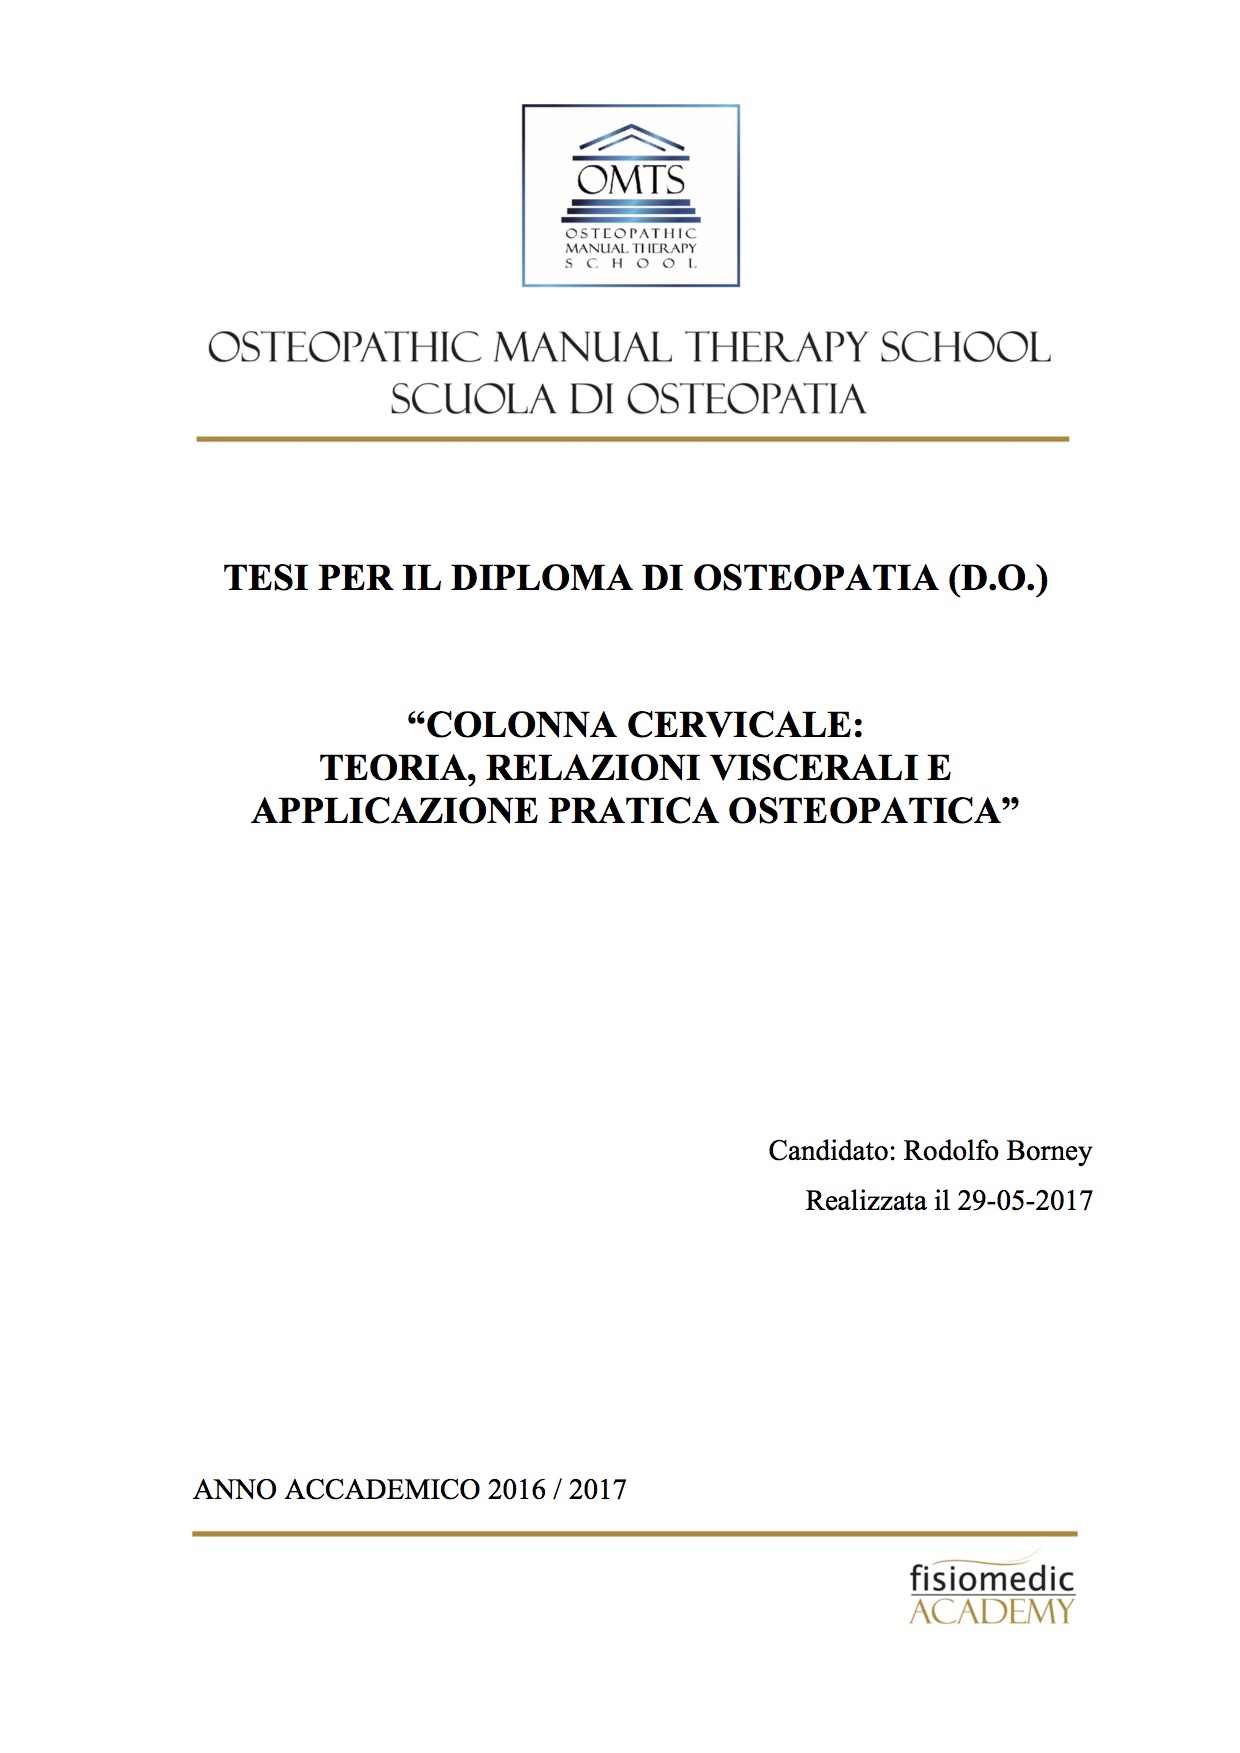 Rodolfo Borney Tesi Diploma Osteopatia 2017